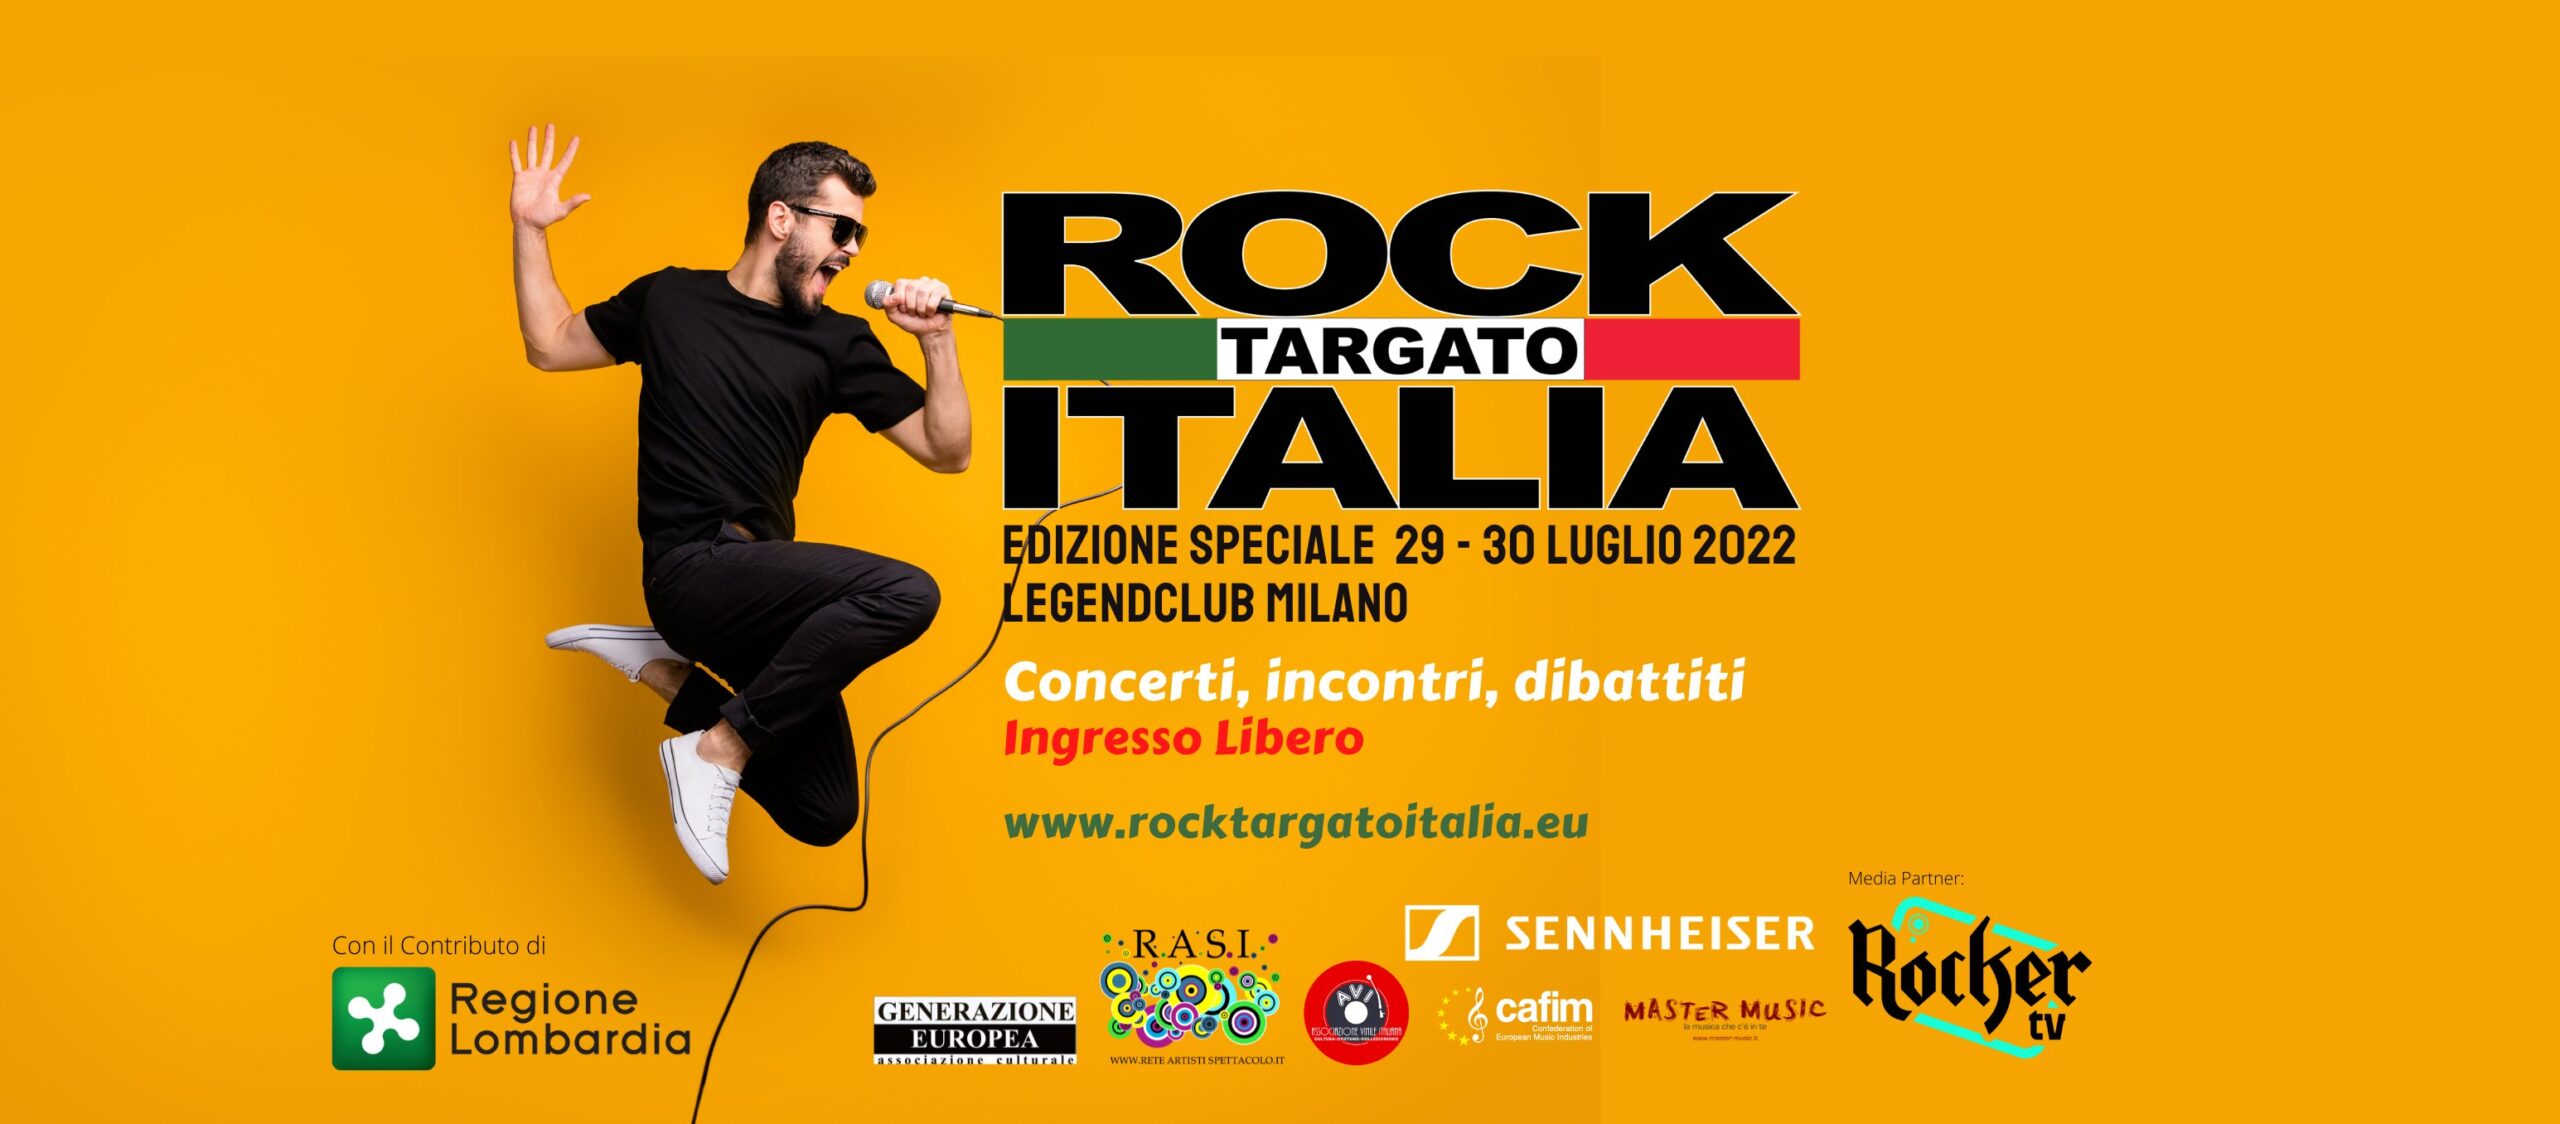 Rock targato Italia